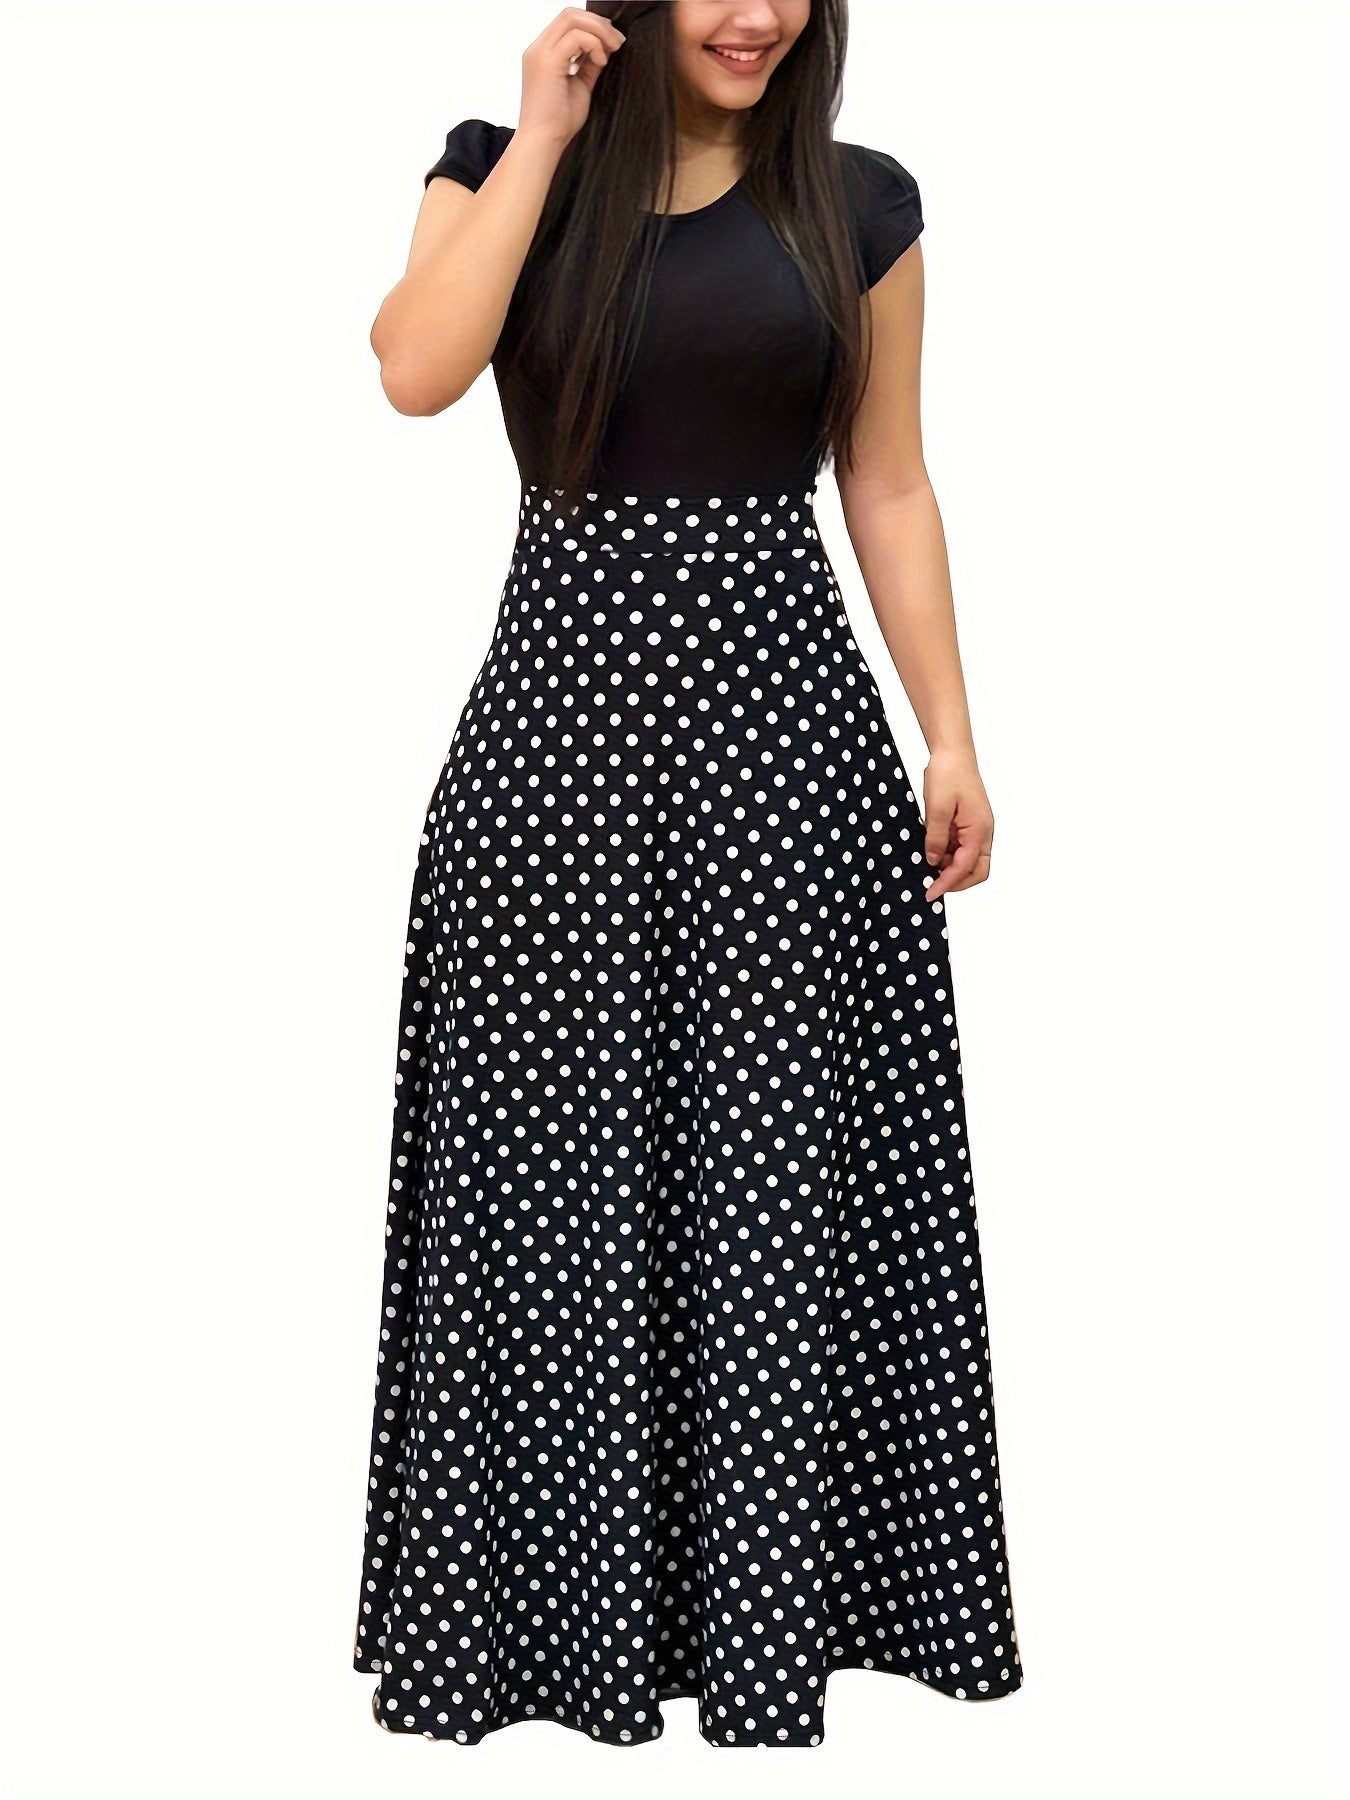 Antmvs Plus Size Colorblock Polka Dot Short Sleeve Maxi Dress, Women's Plus Elegant Medium Stretch Maxi Dress